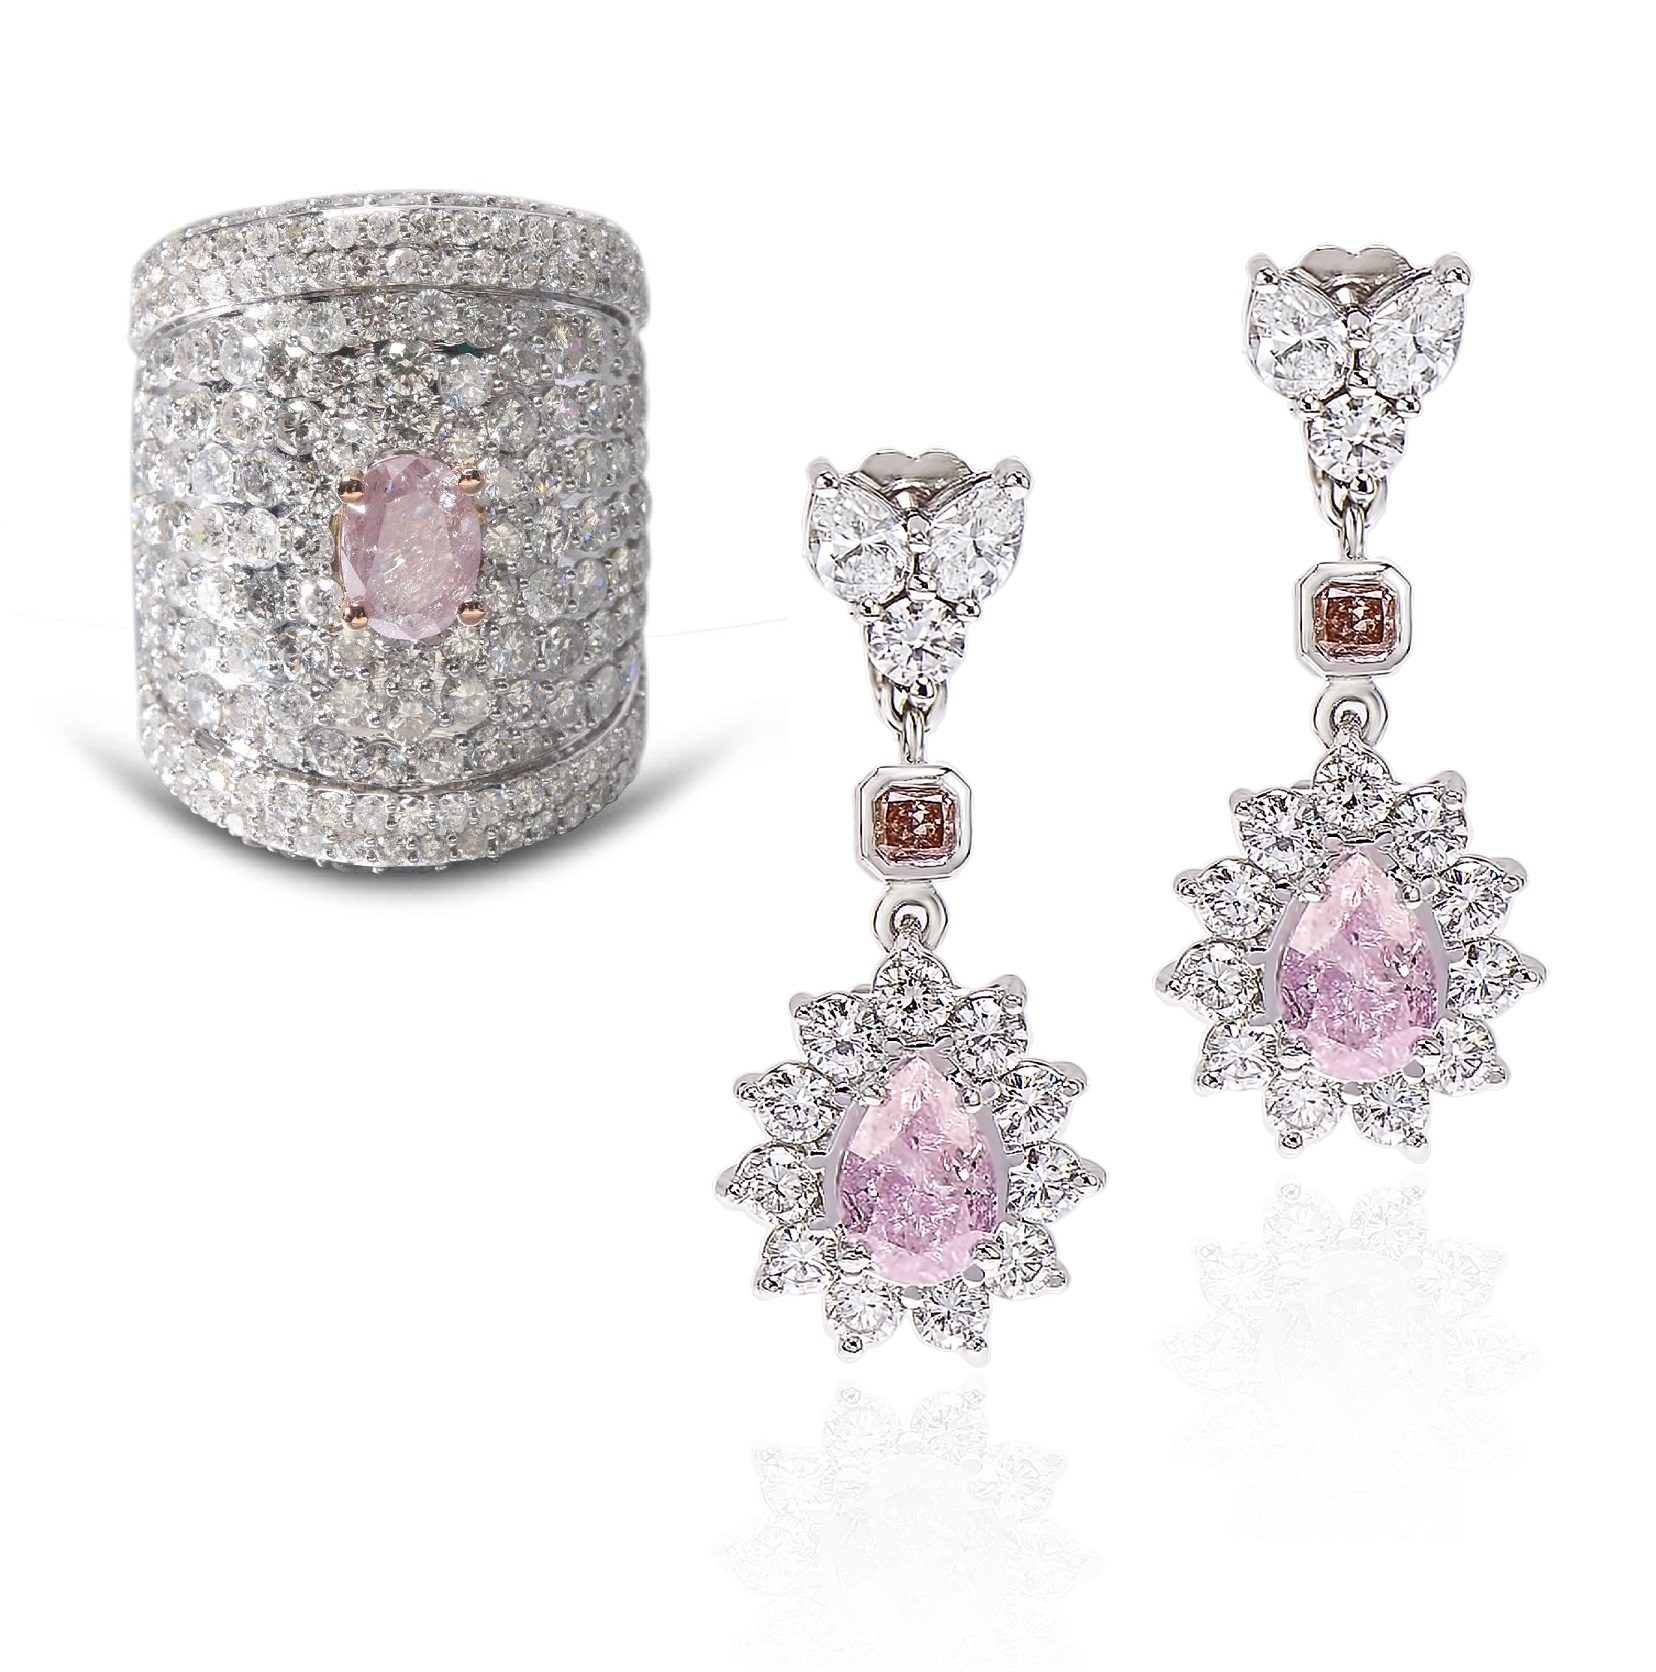 Mixed Fancy Purplish Pink Diamond Ring & Earrings Set (12.96ct TW)